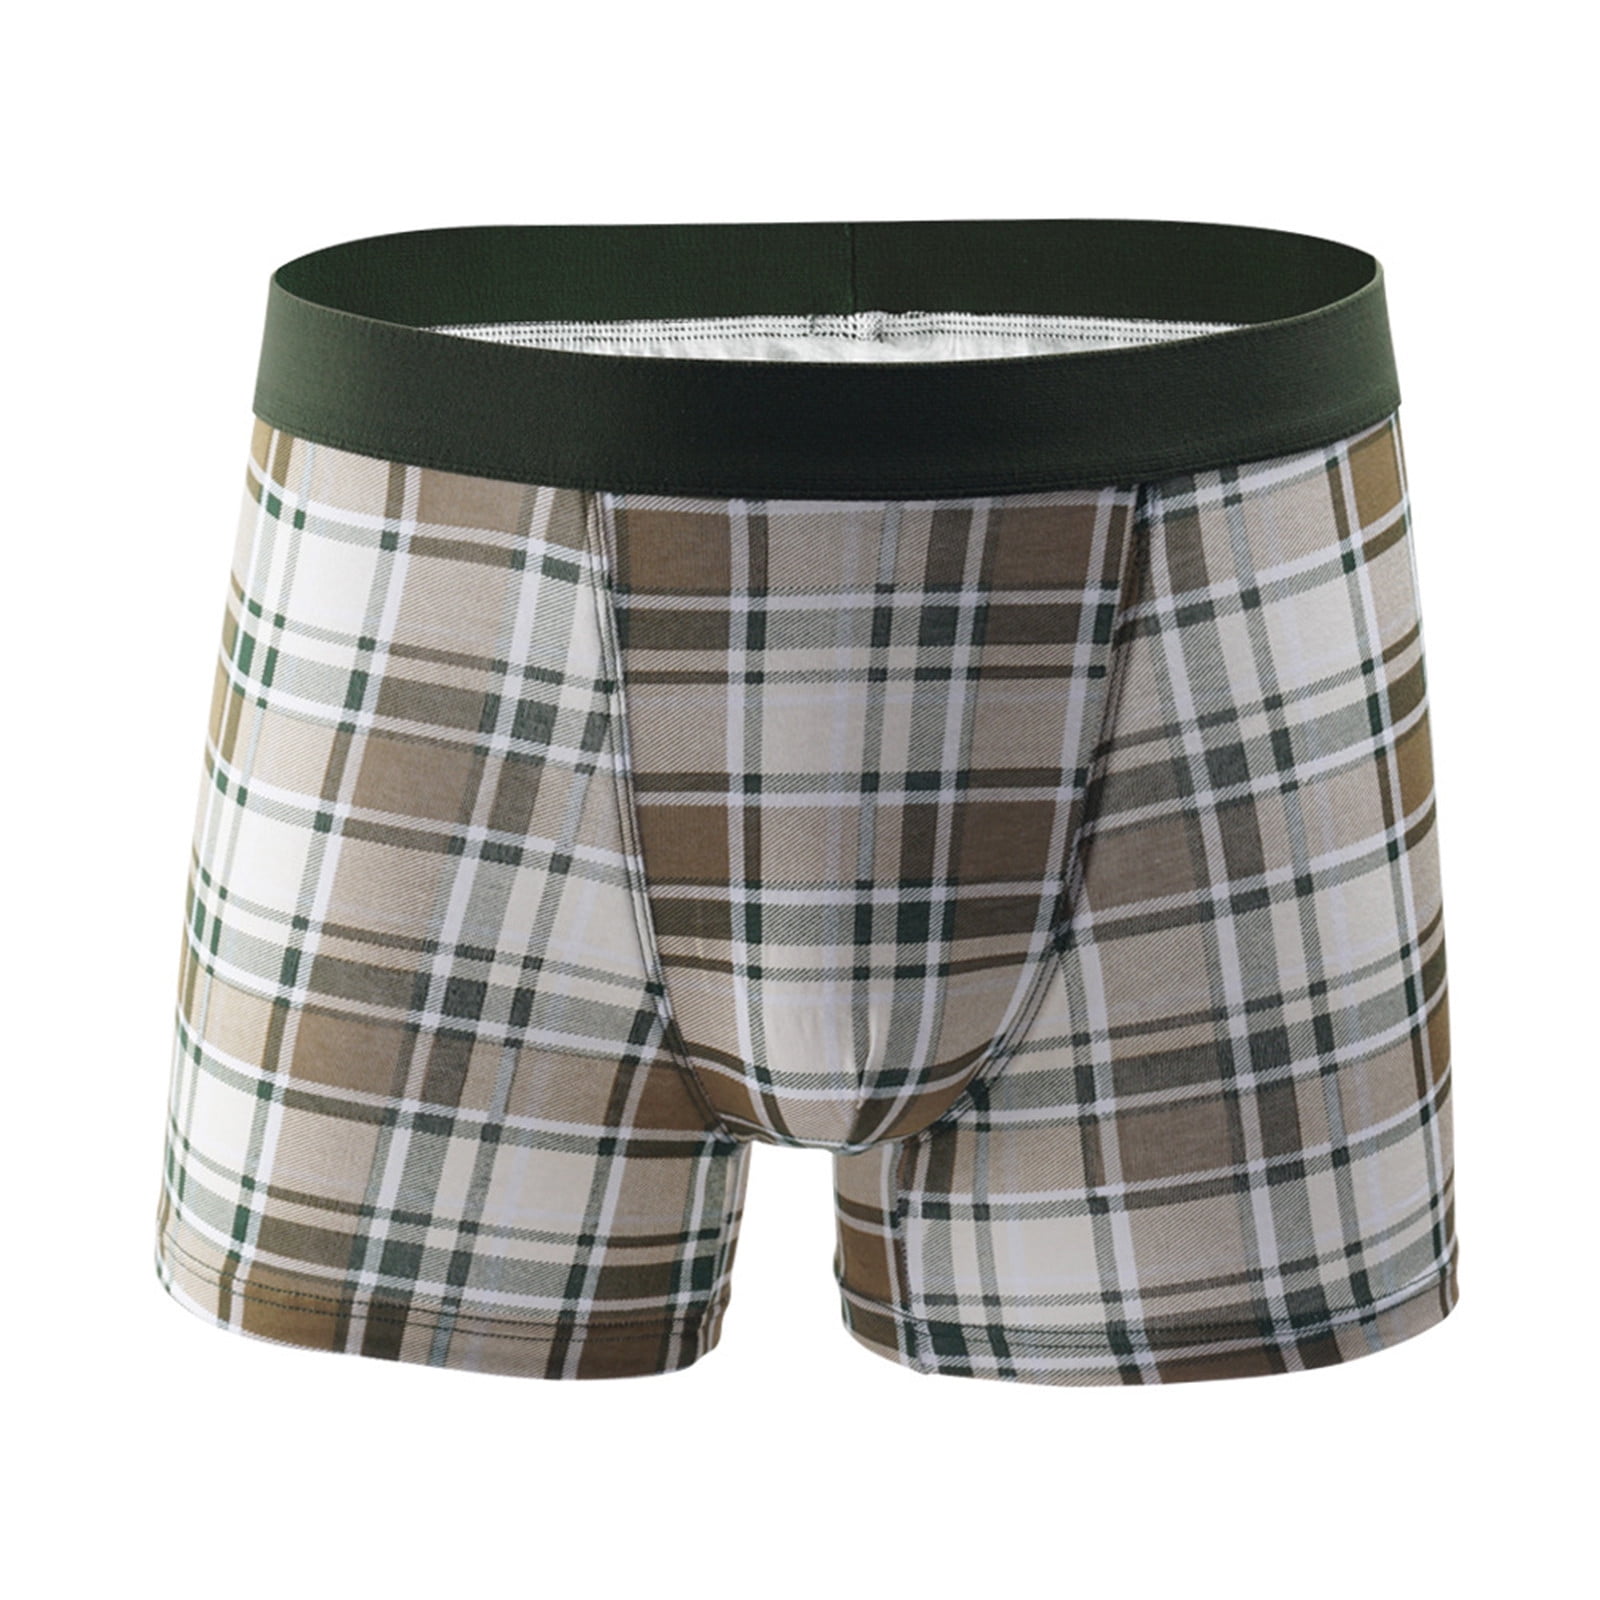 Penkiiy Men's Underwear Cotton Large Size Fit Men's Boxer